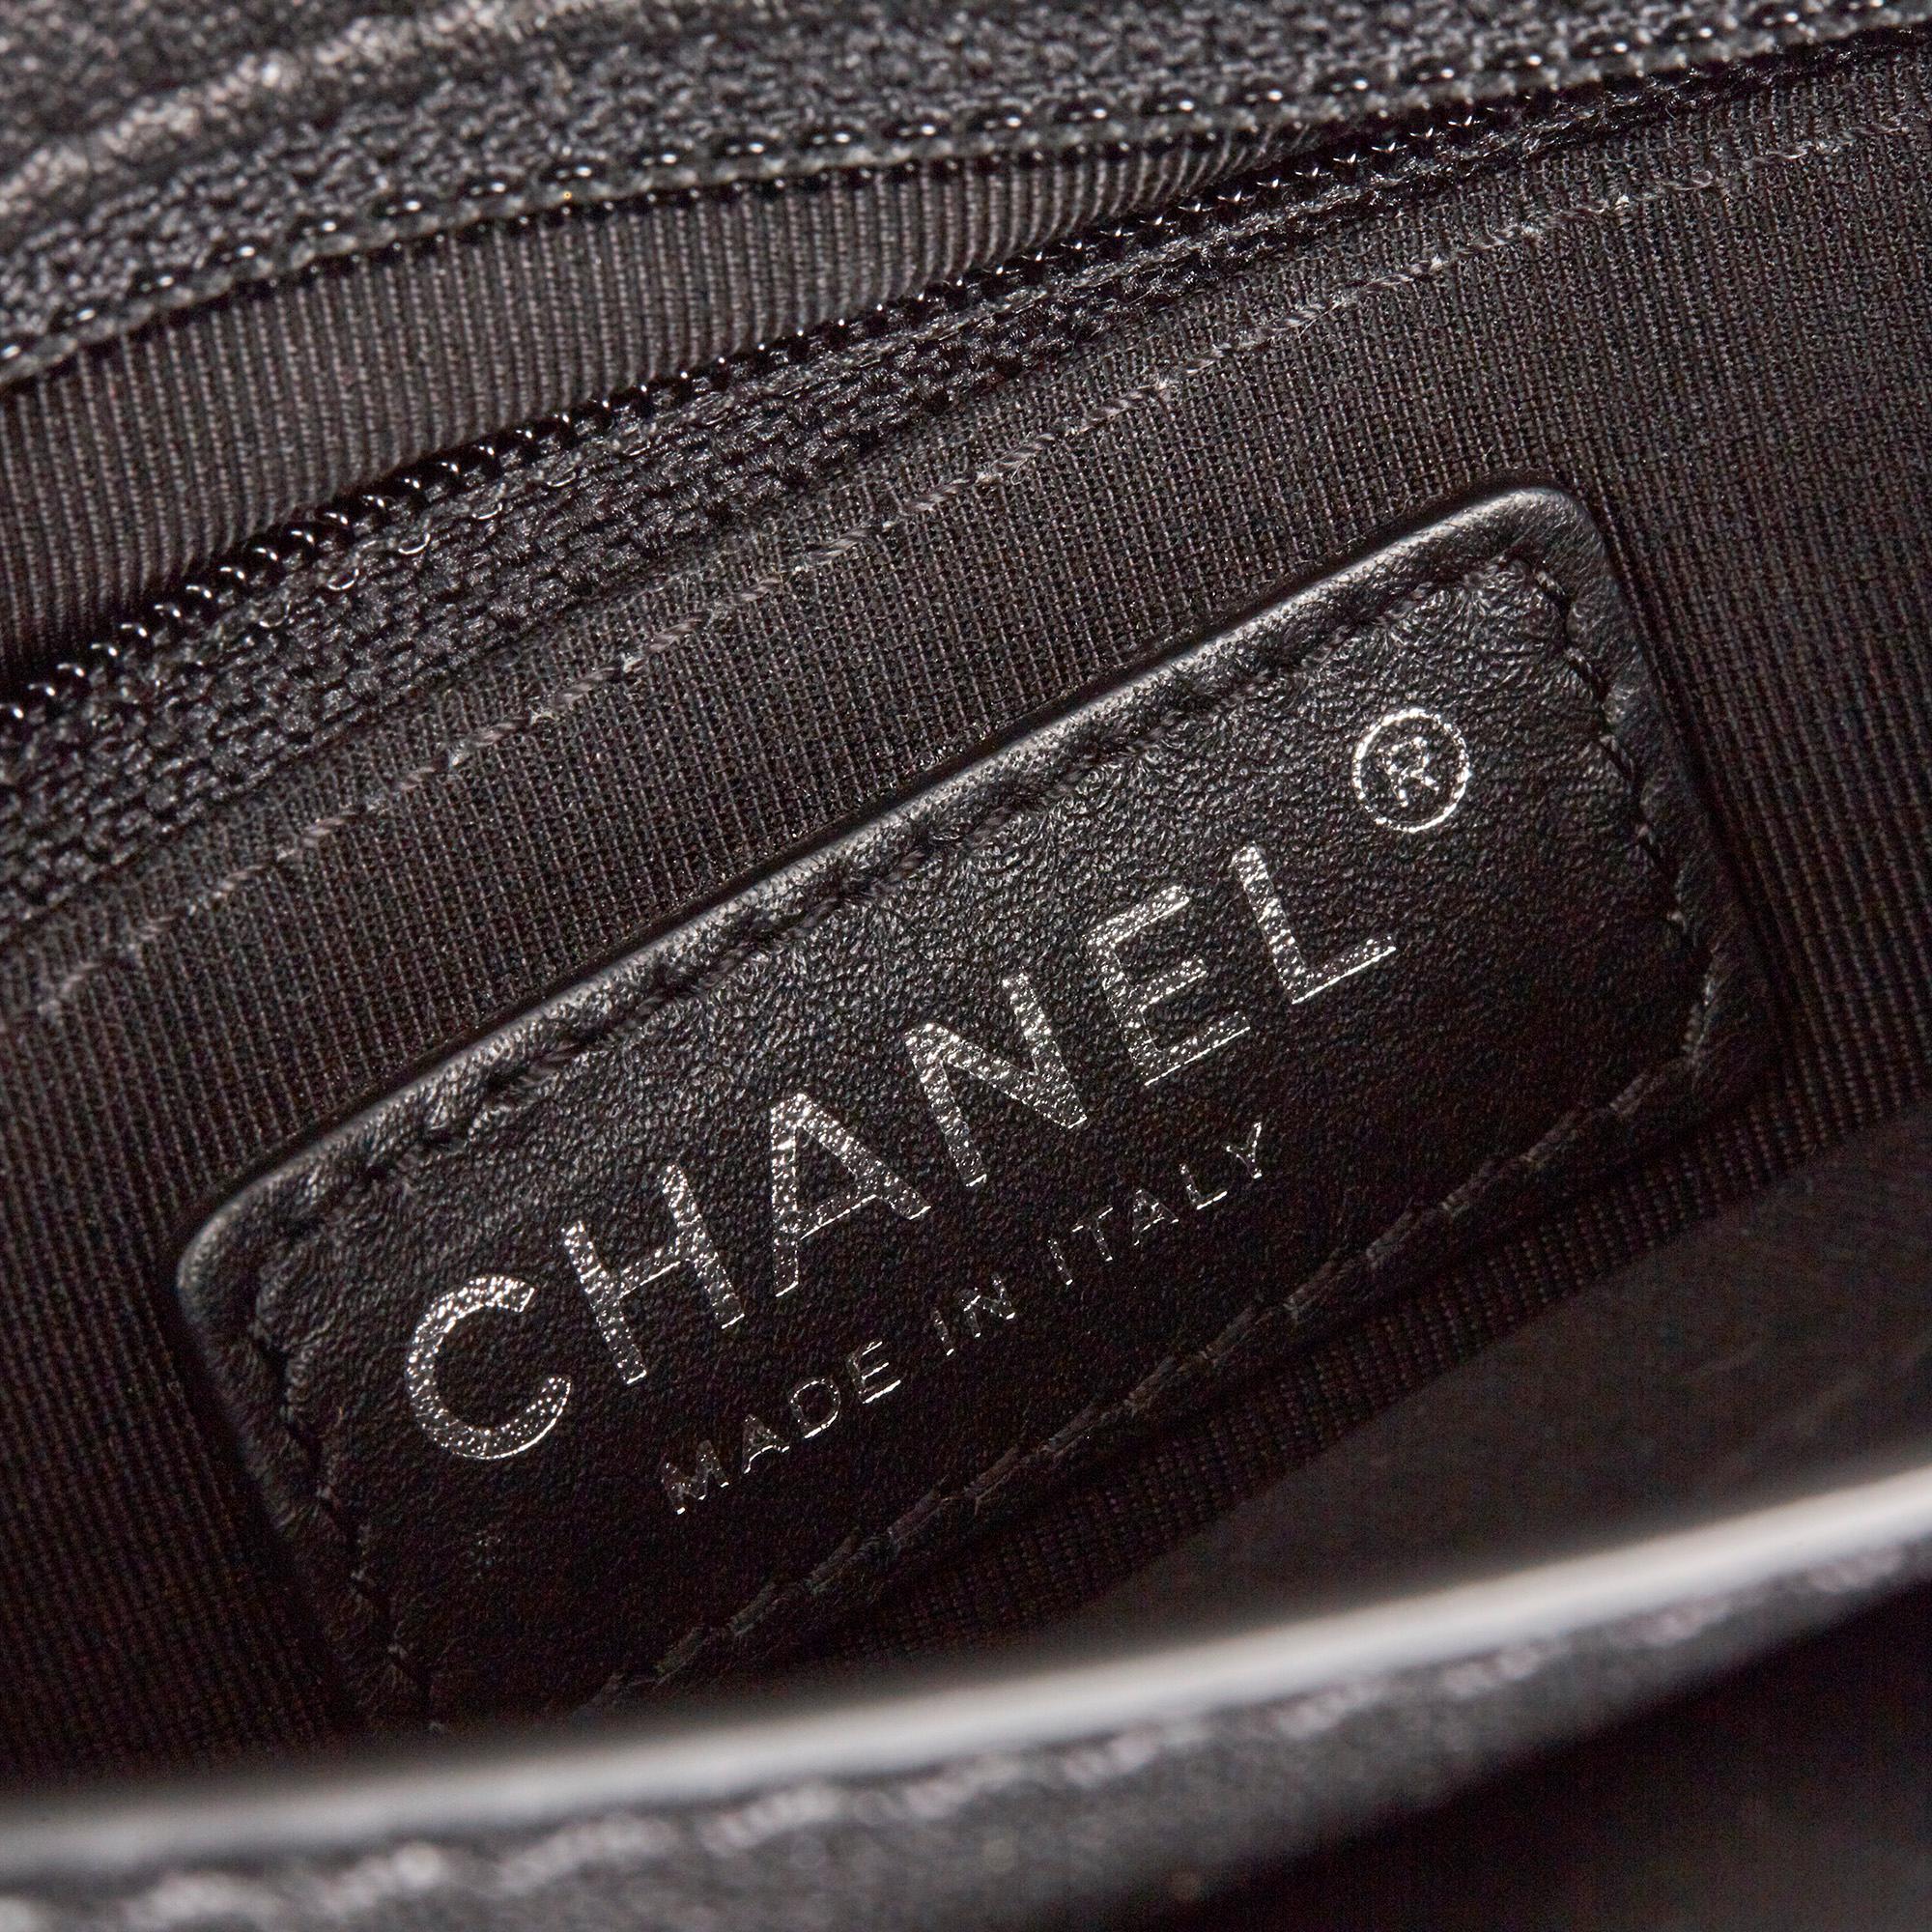 2017 Chanel Black Quilted Calfskin Leather Saddle Bag 2